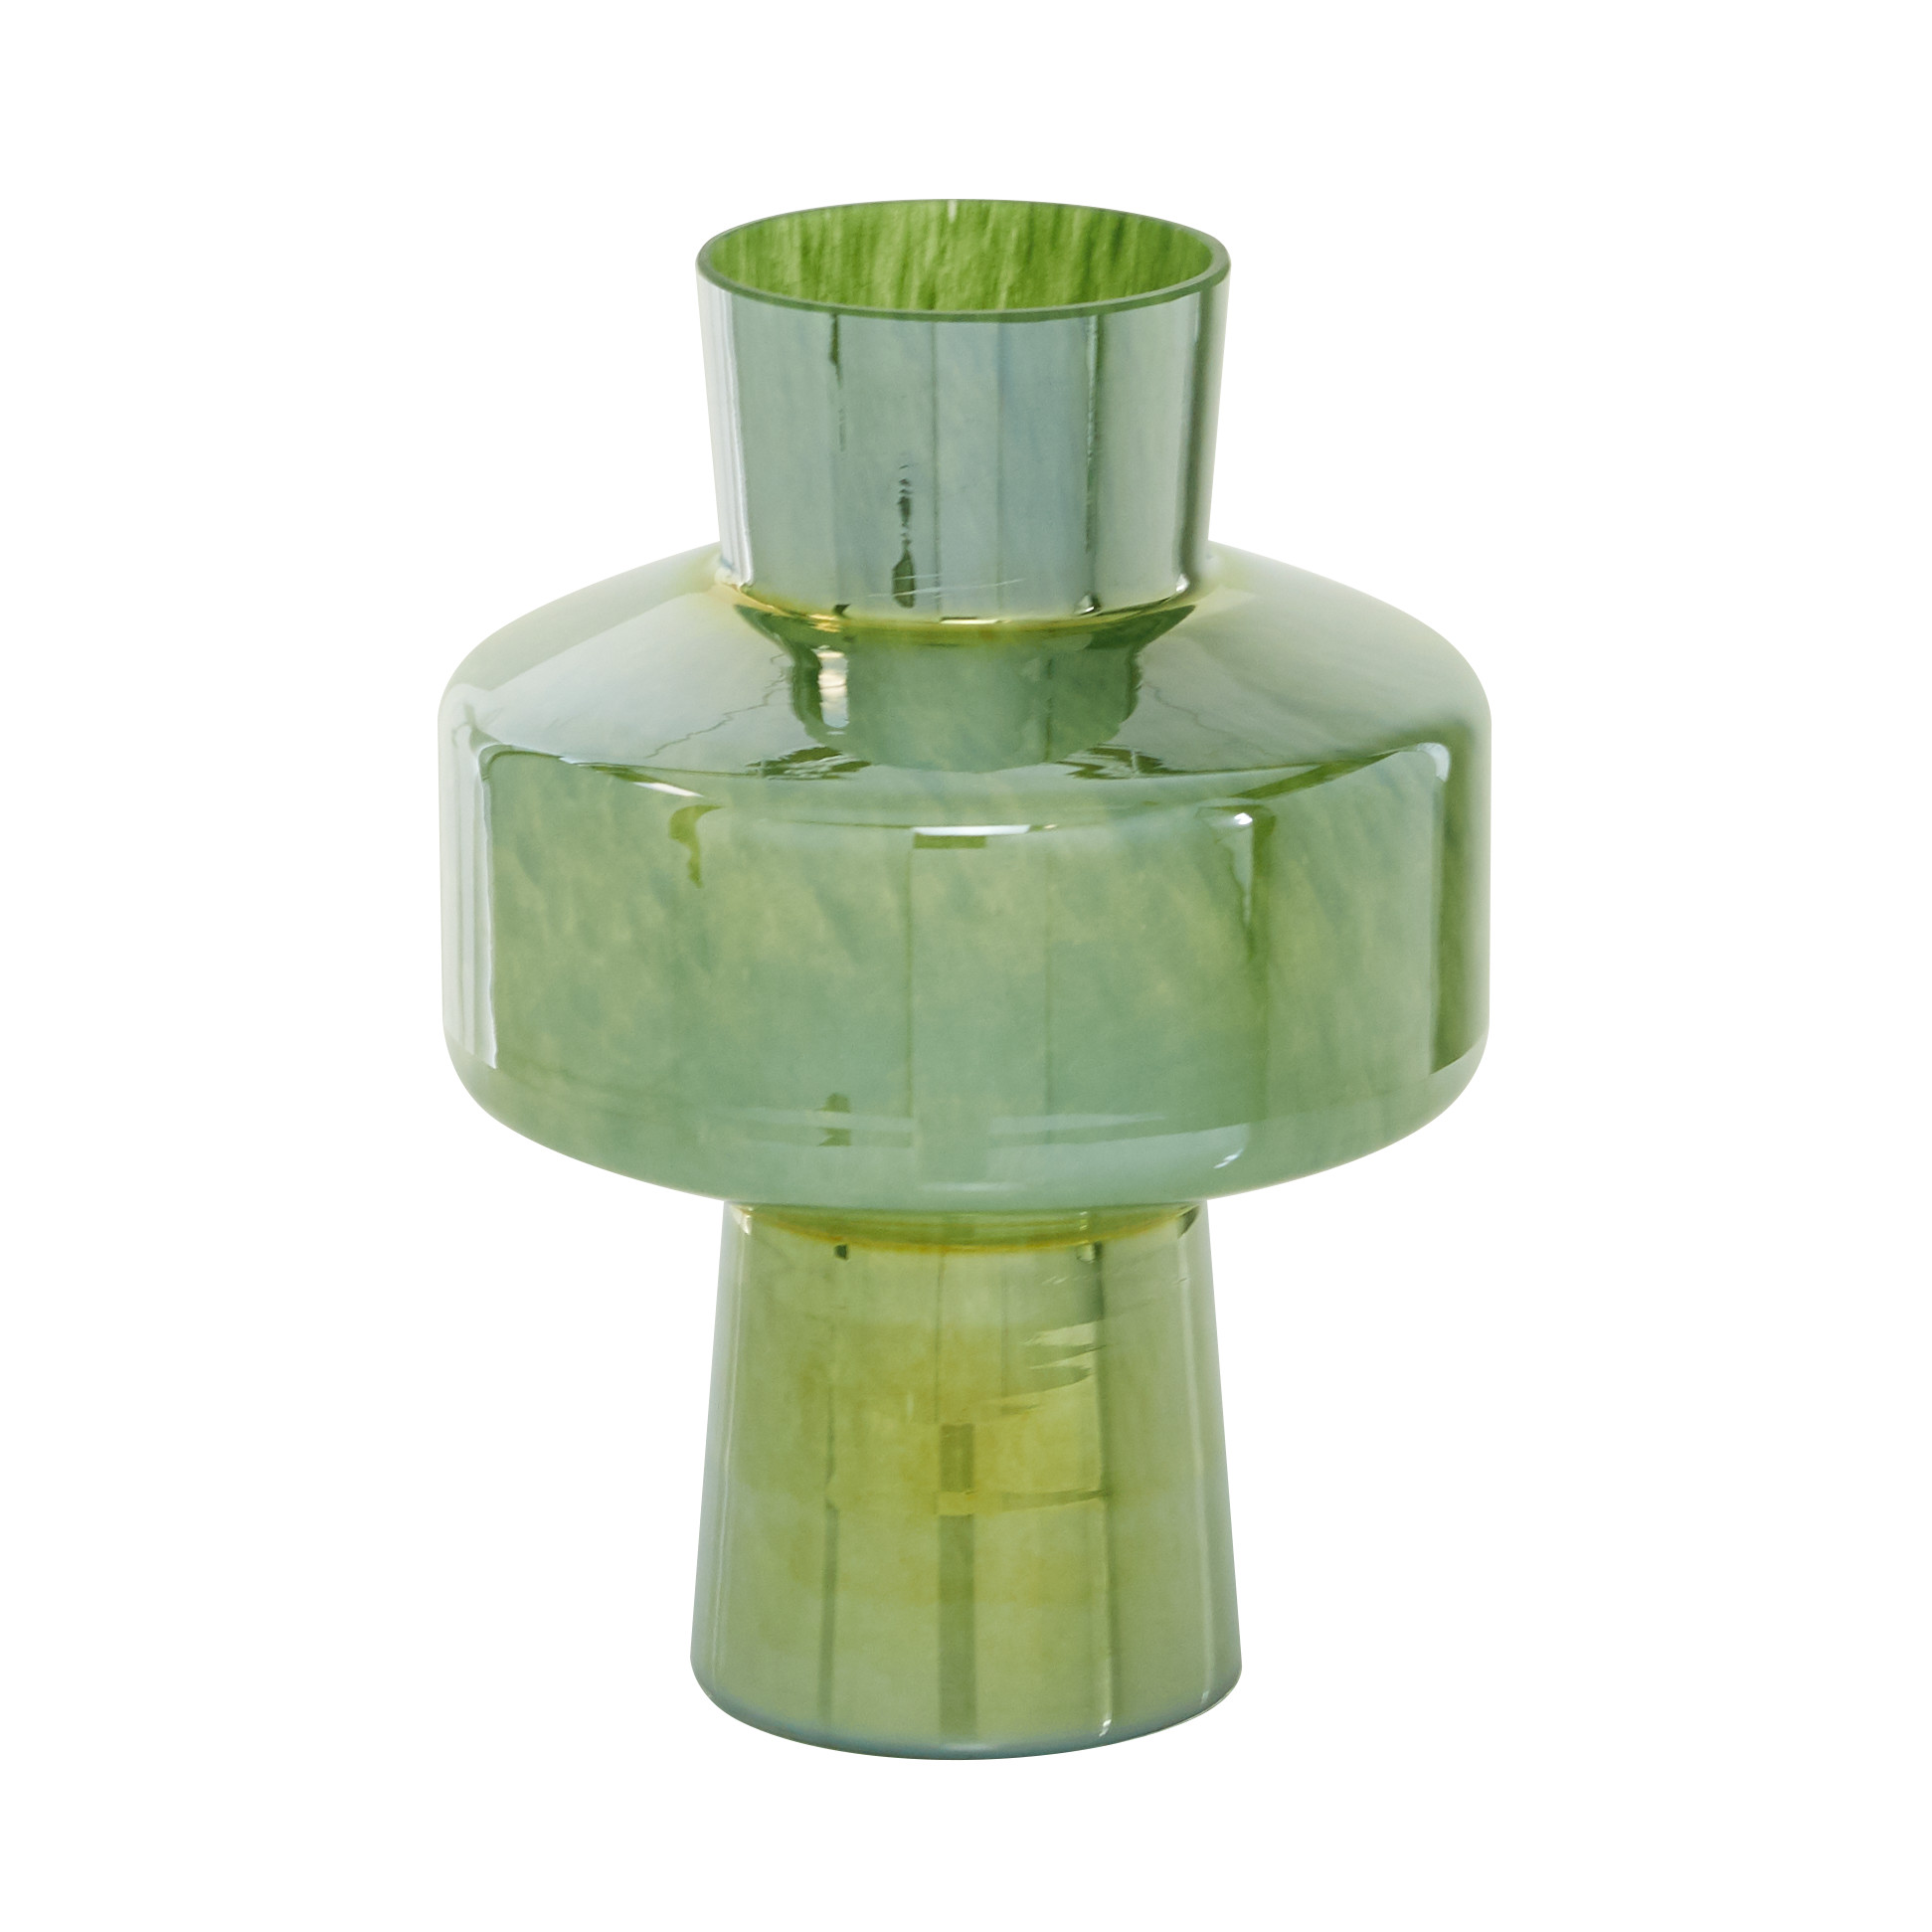 The Novogratz 13" Green Glass Vase - image 1 of 7